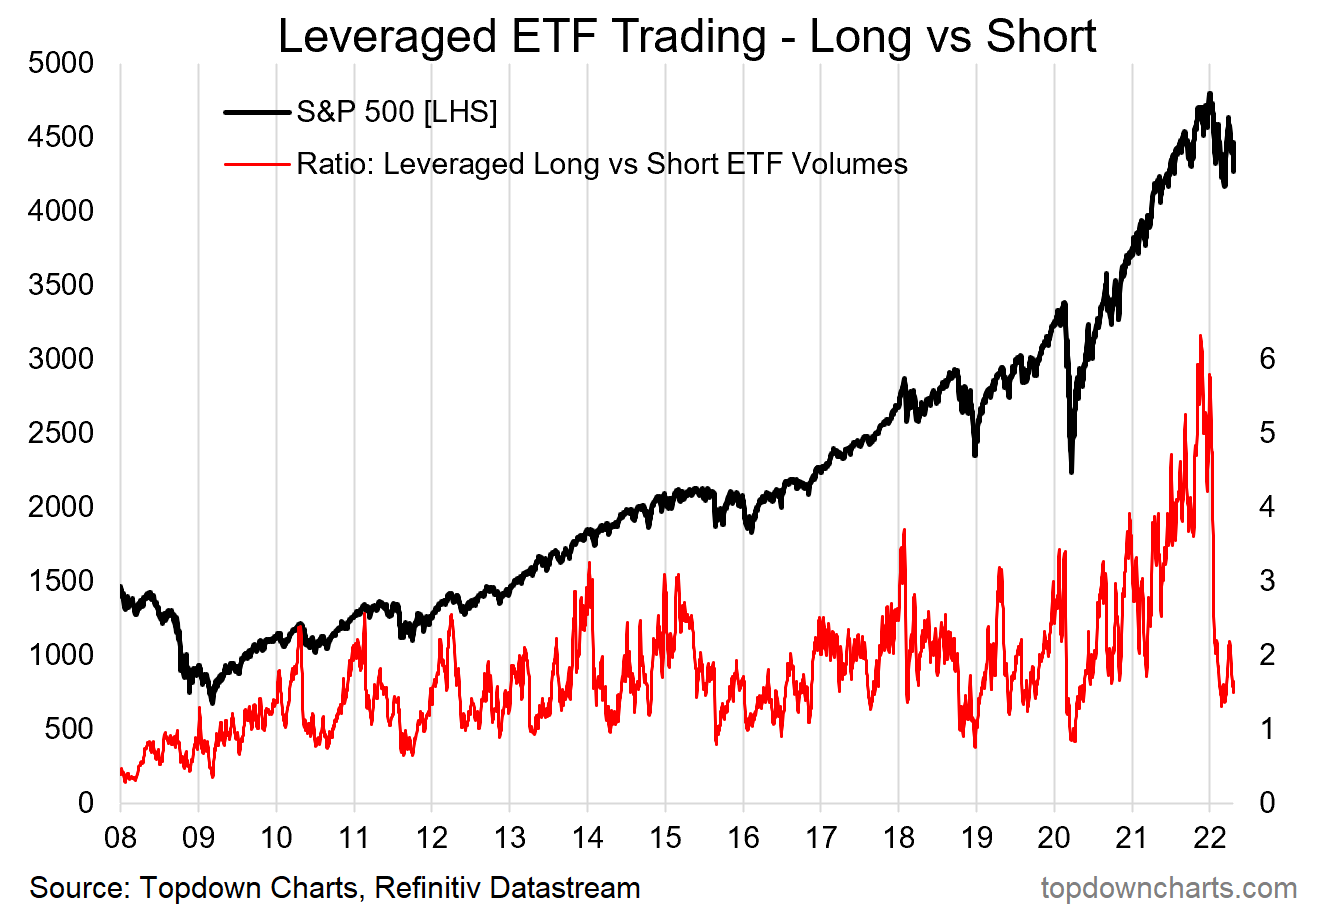 ETF Trading - Long vs Short